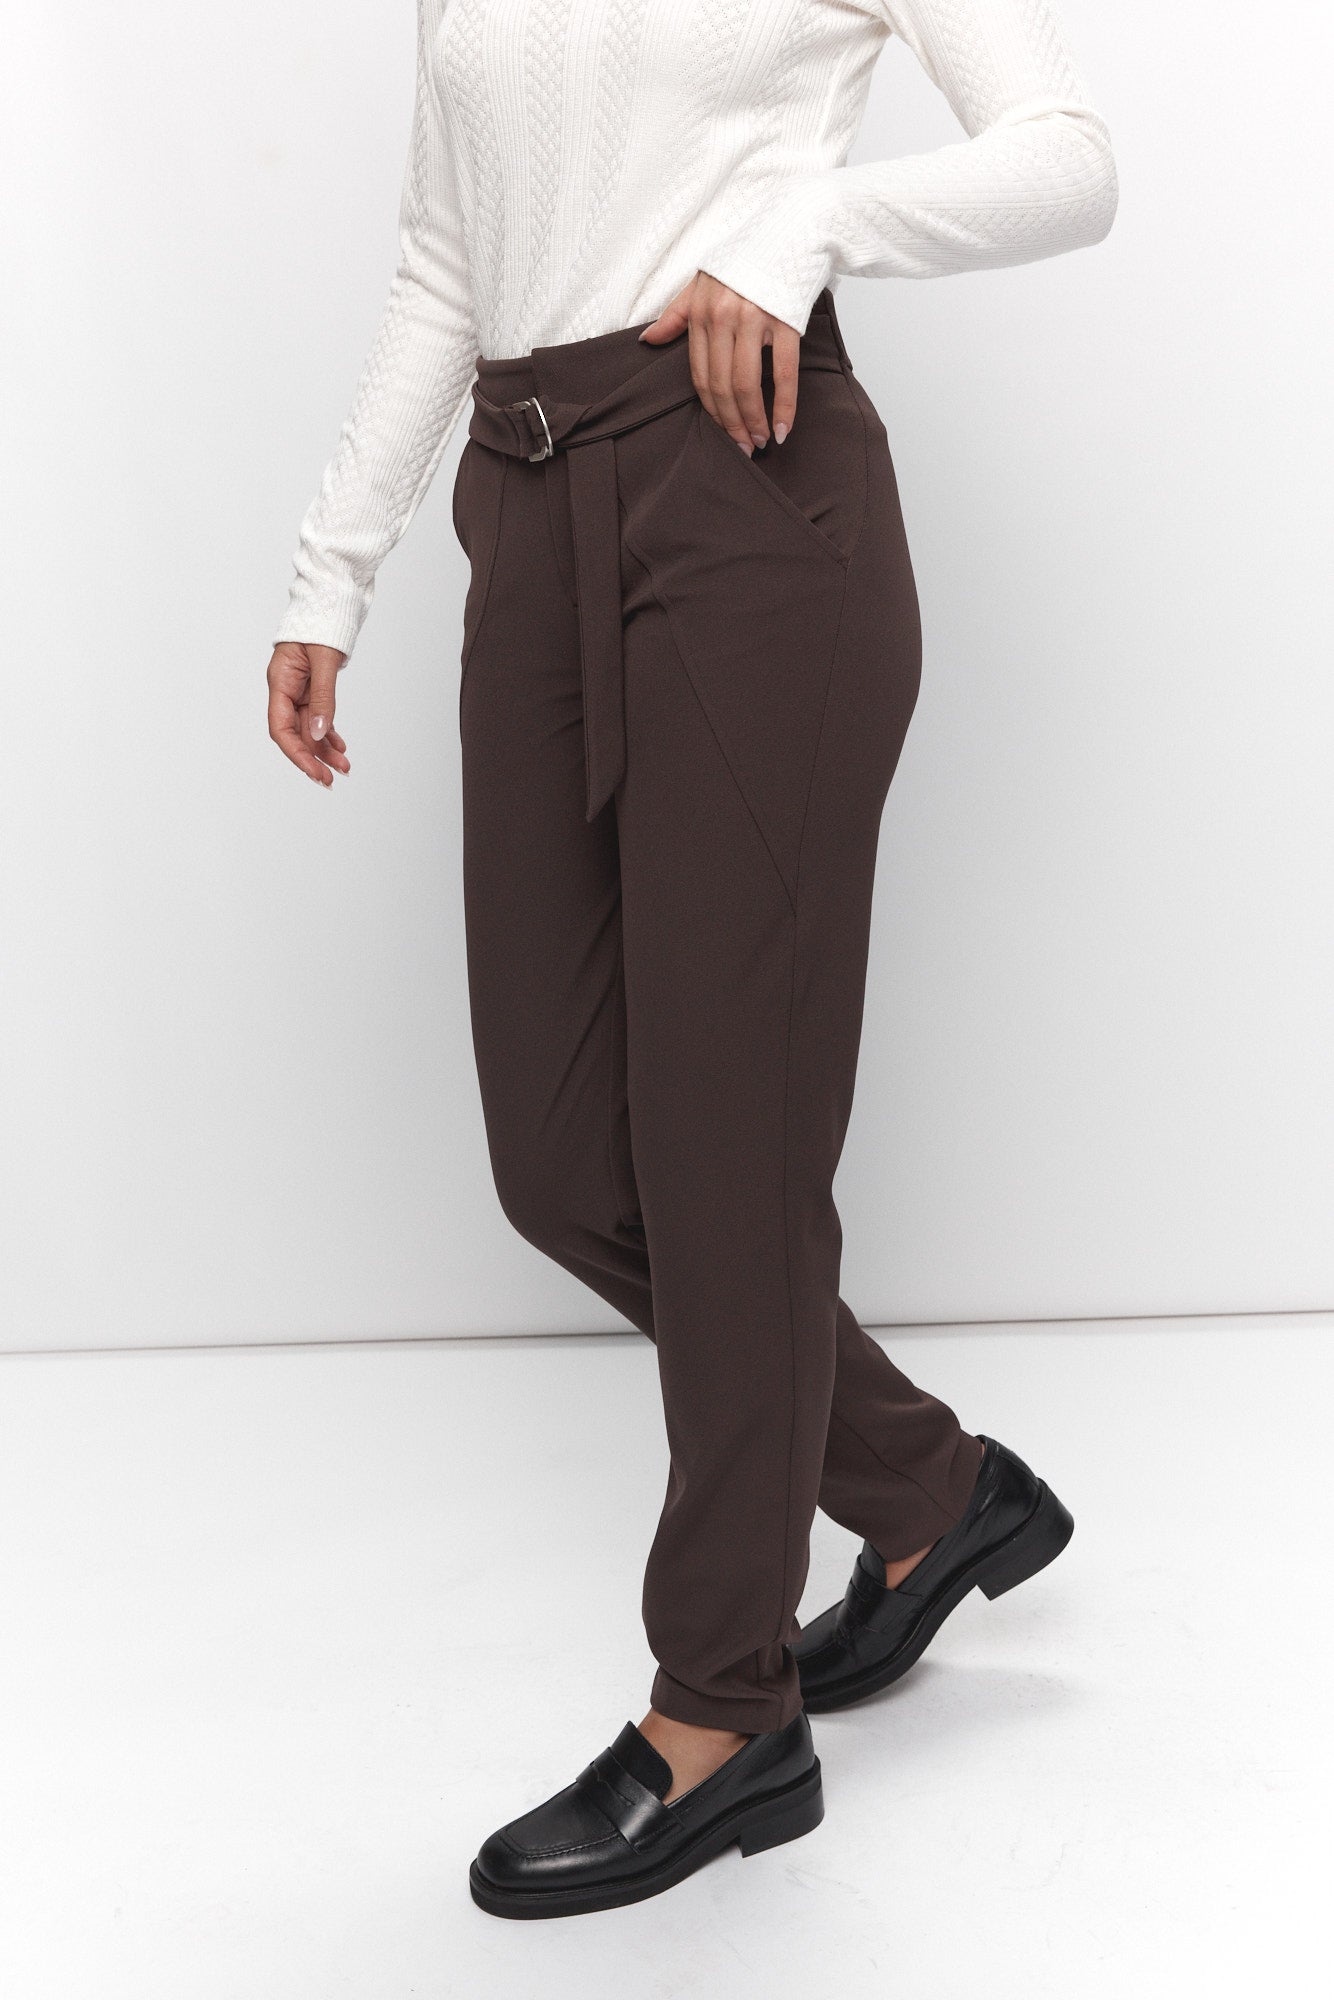 Pantalon marron | Florane JOELLE Collection